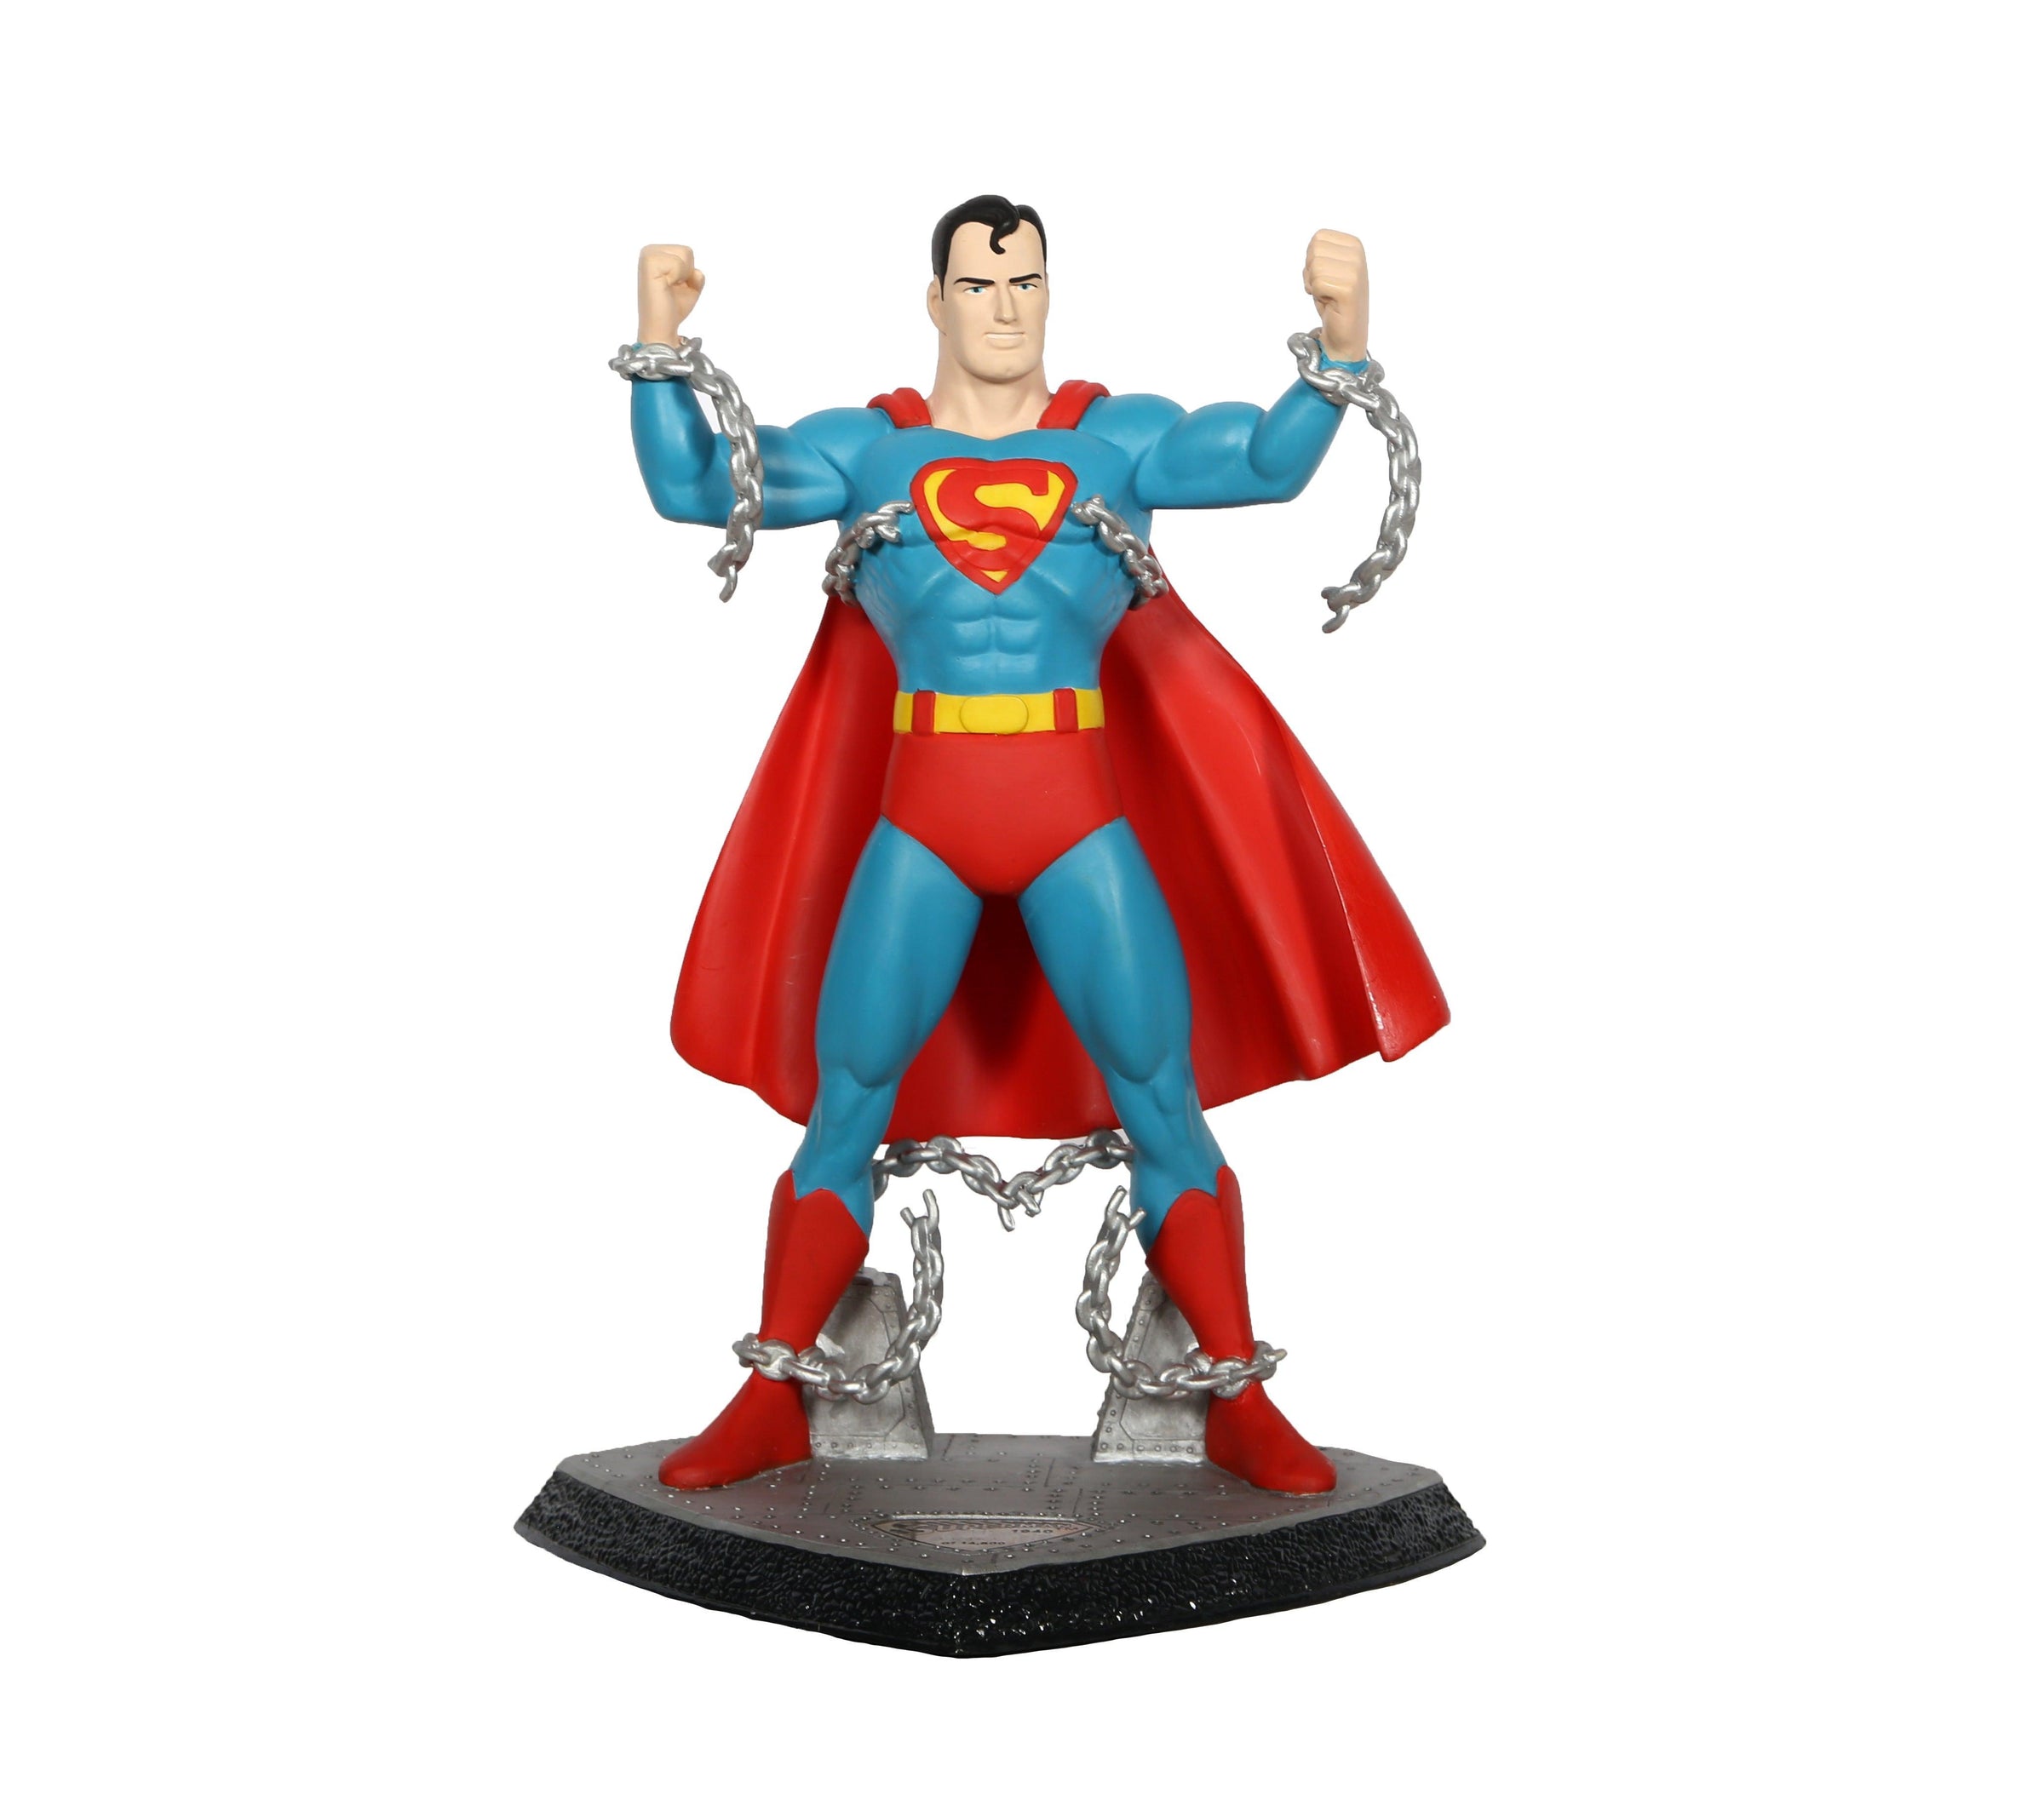 Hallmark Golden Age Limited Edition Superman Man of Steel Figurine